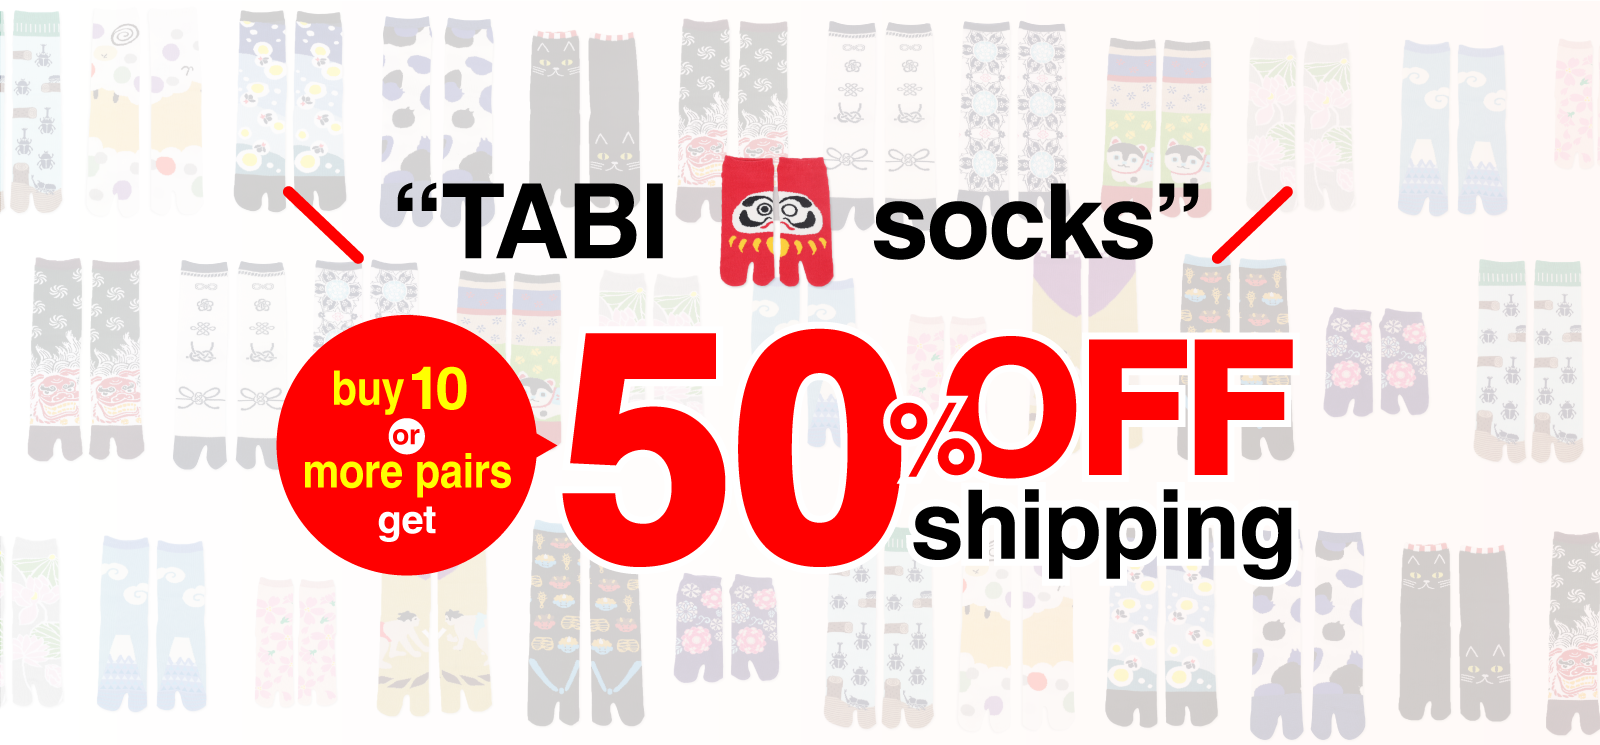 Ninja Tabi Socks are the perfect companion for all Tabi Boots